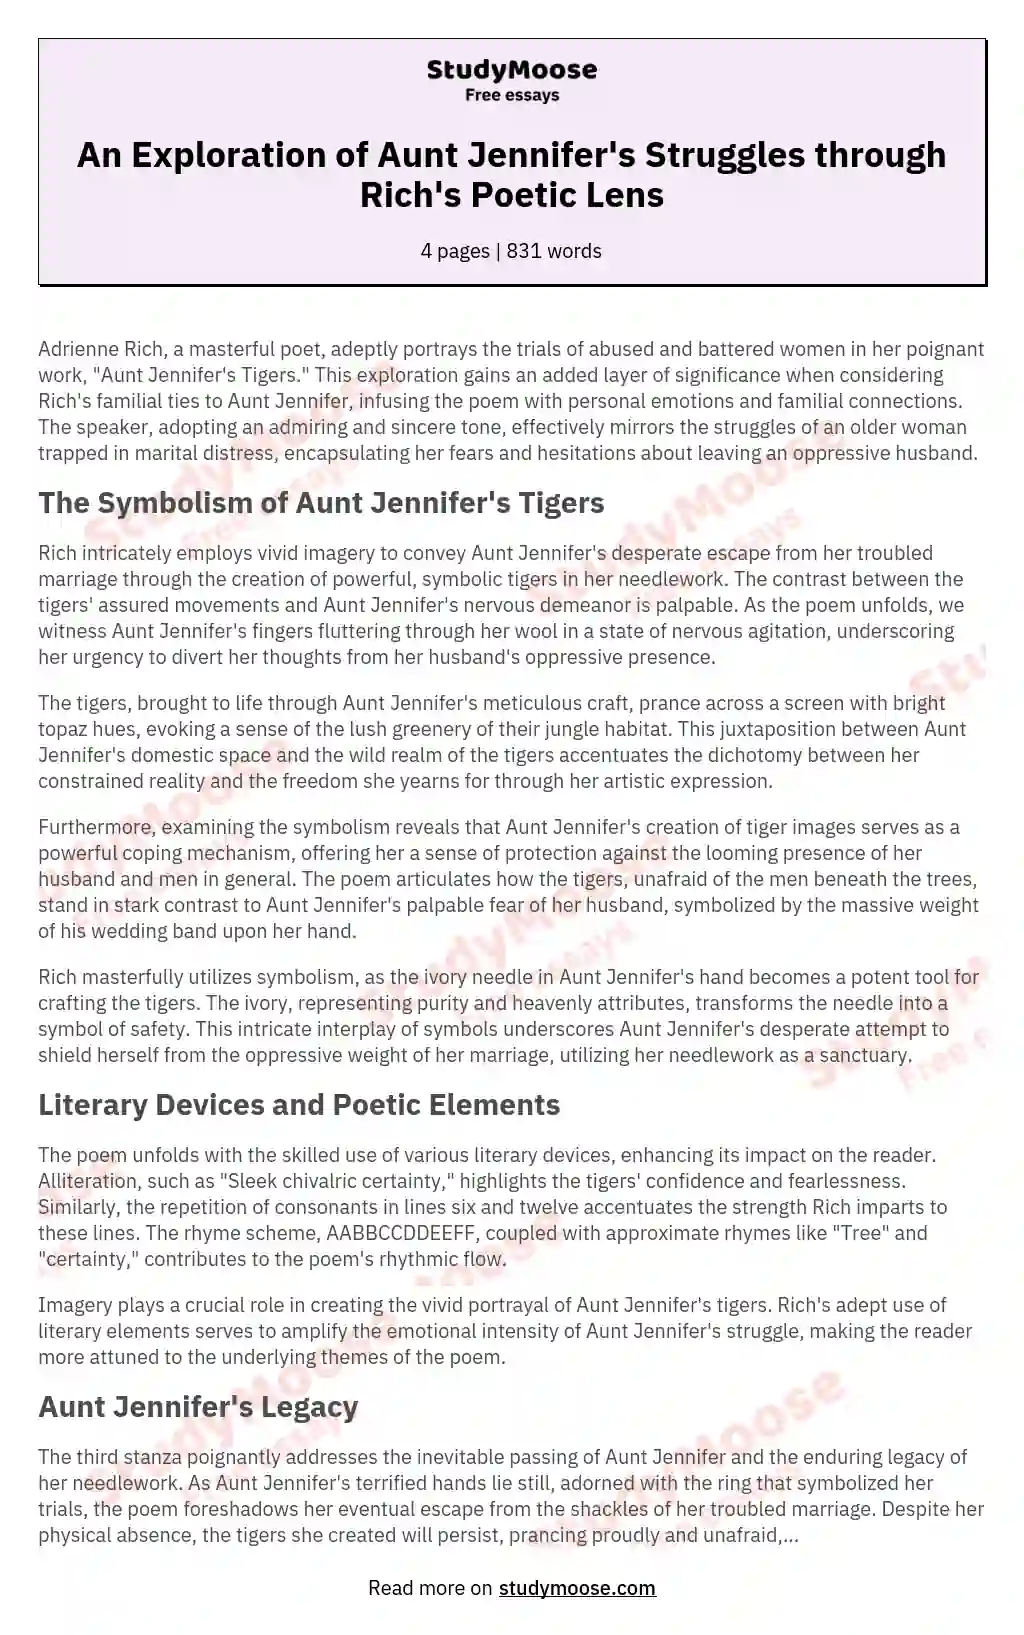 Women Abuse in A Poem Aunt Jennifer's Tigers